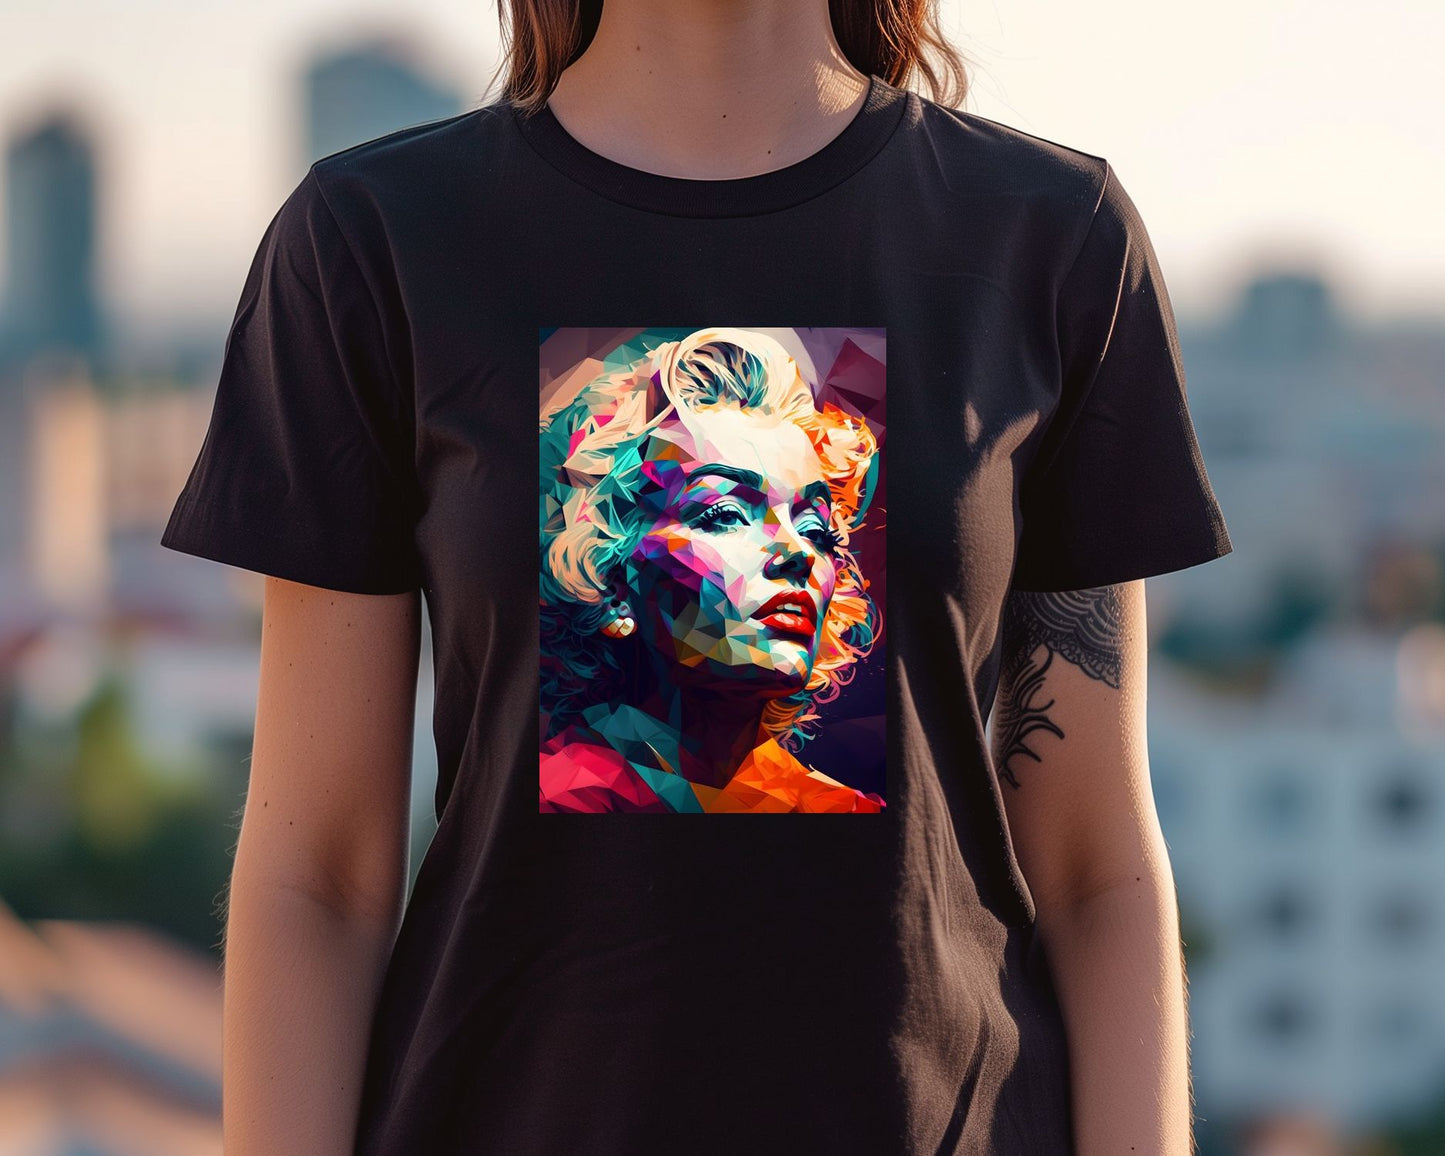 Marilyn Monroe Pop Art - @WpapArtist